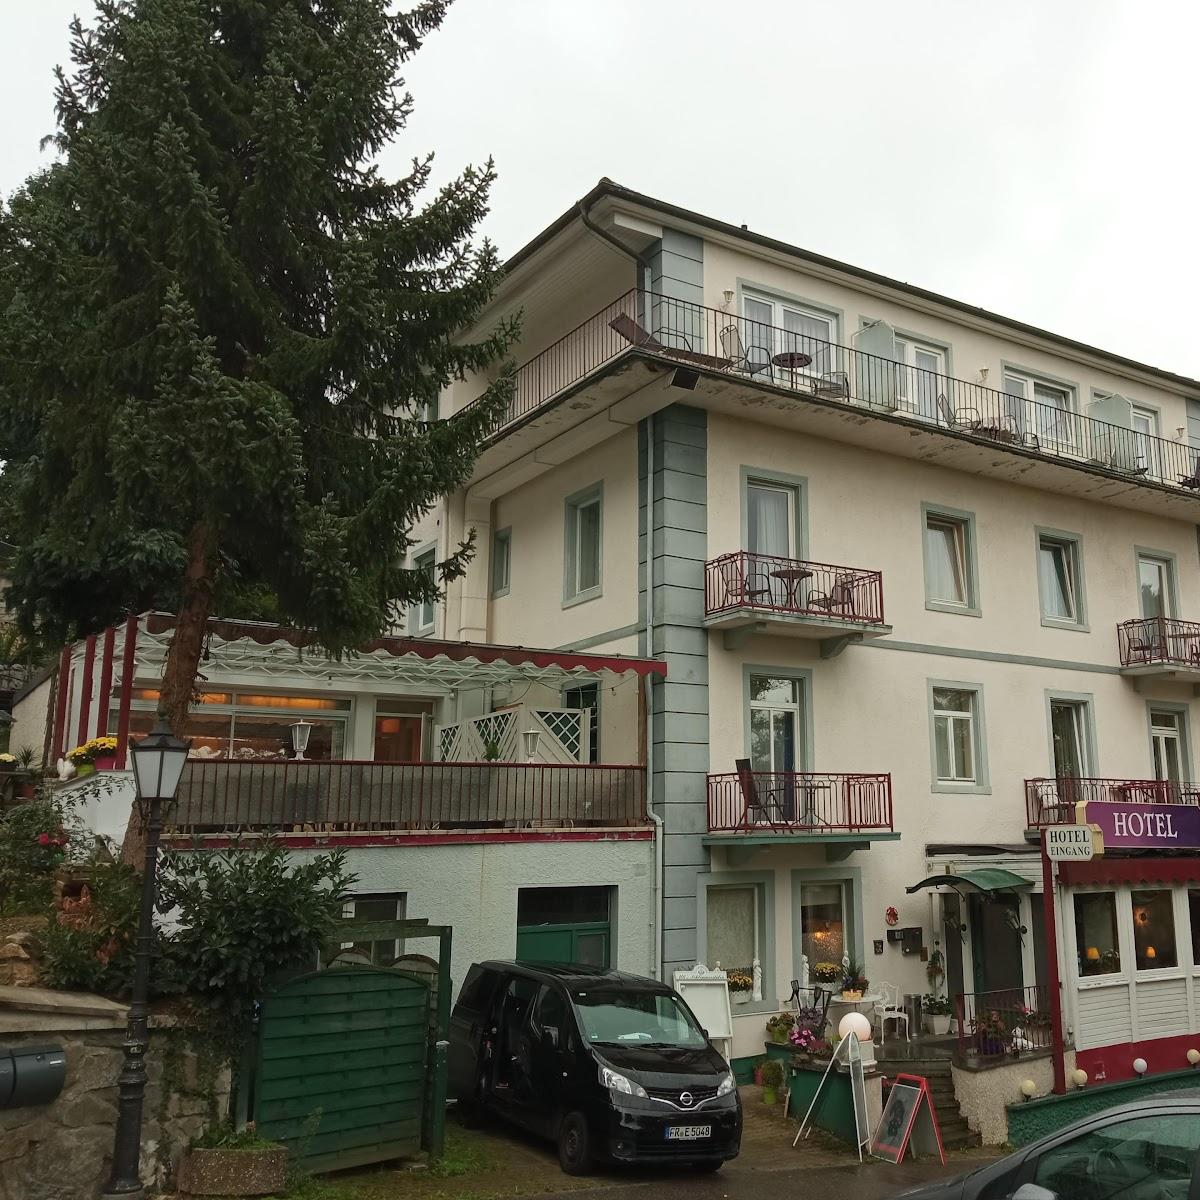 Restaurant "Hotel Eberhardt-Burghardt" in Badenweiler